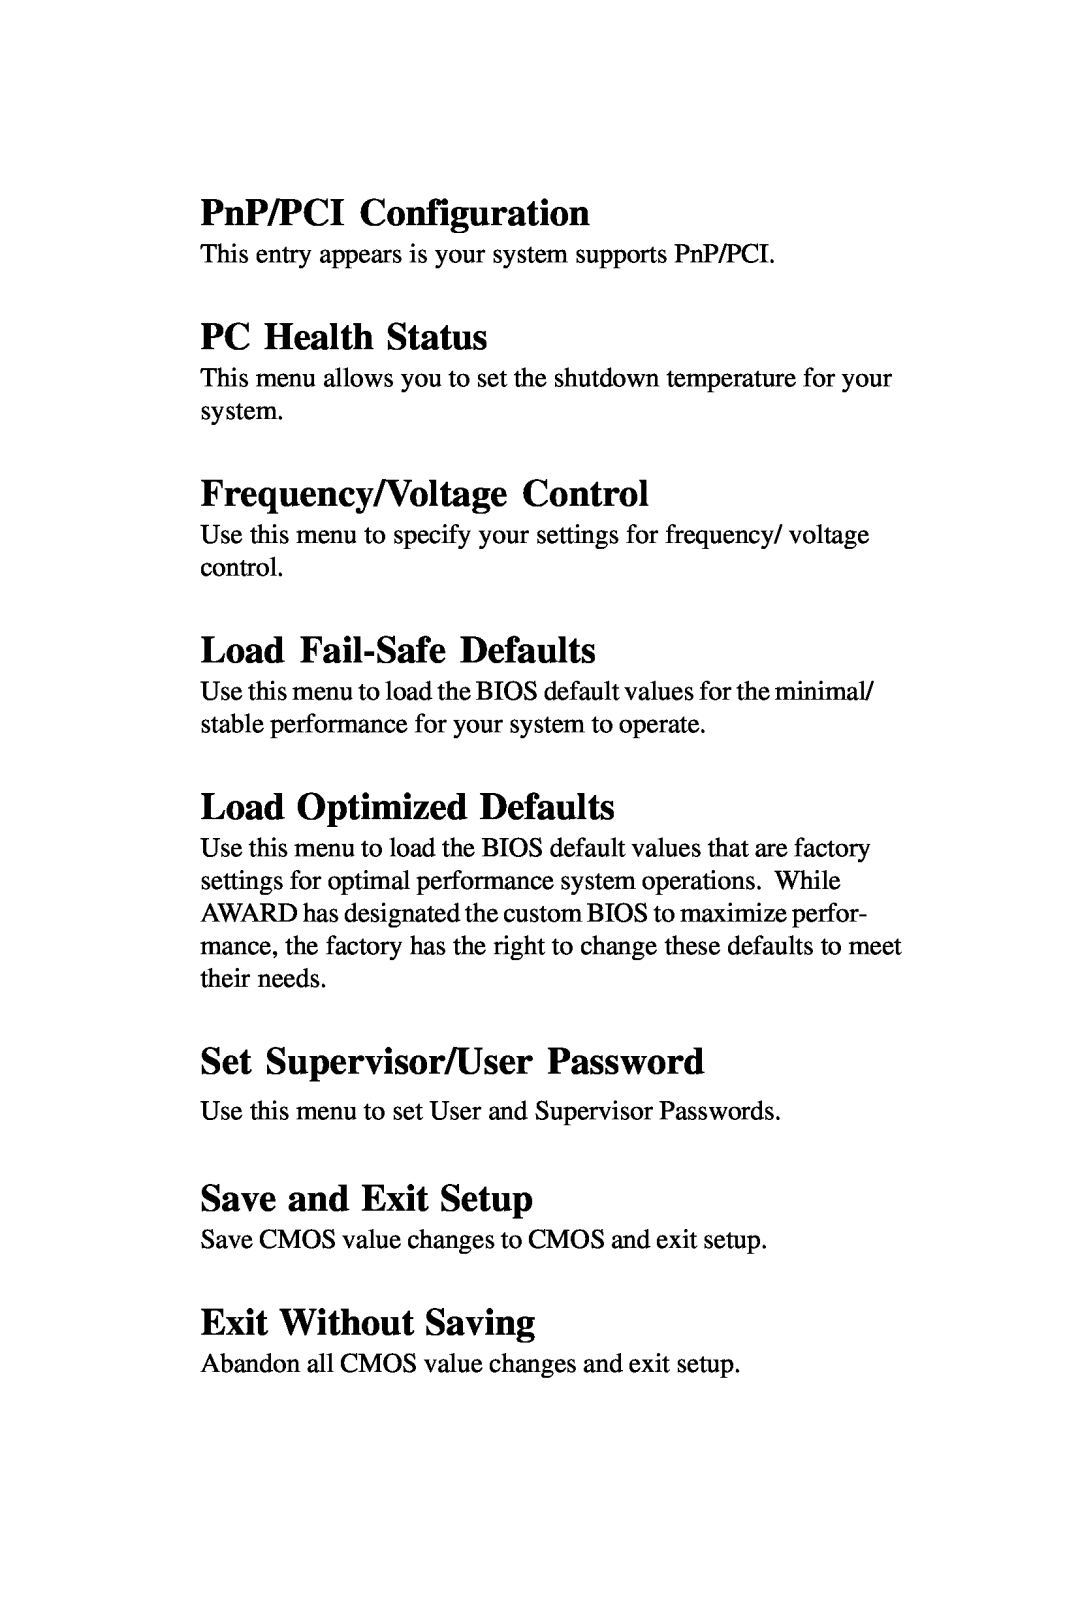 Intel PCM-6896 manual PnP/PCI Configuration, PC Health Status, Frequency/Voltage Control, Load Fail-Safe Defaults 